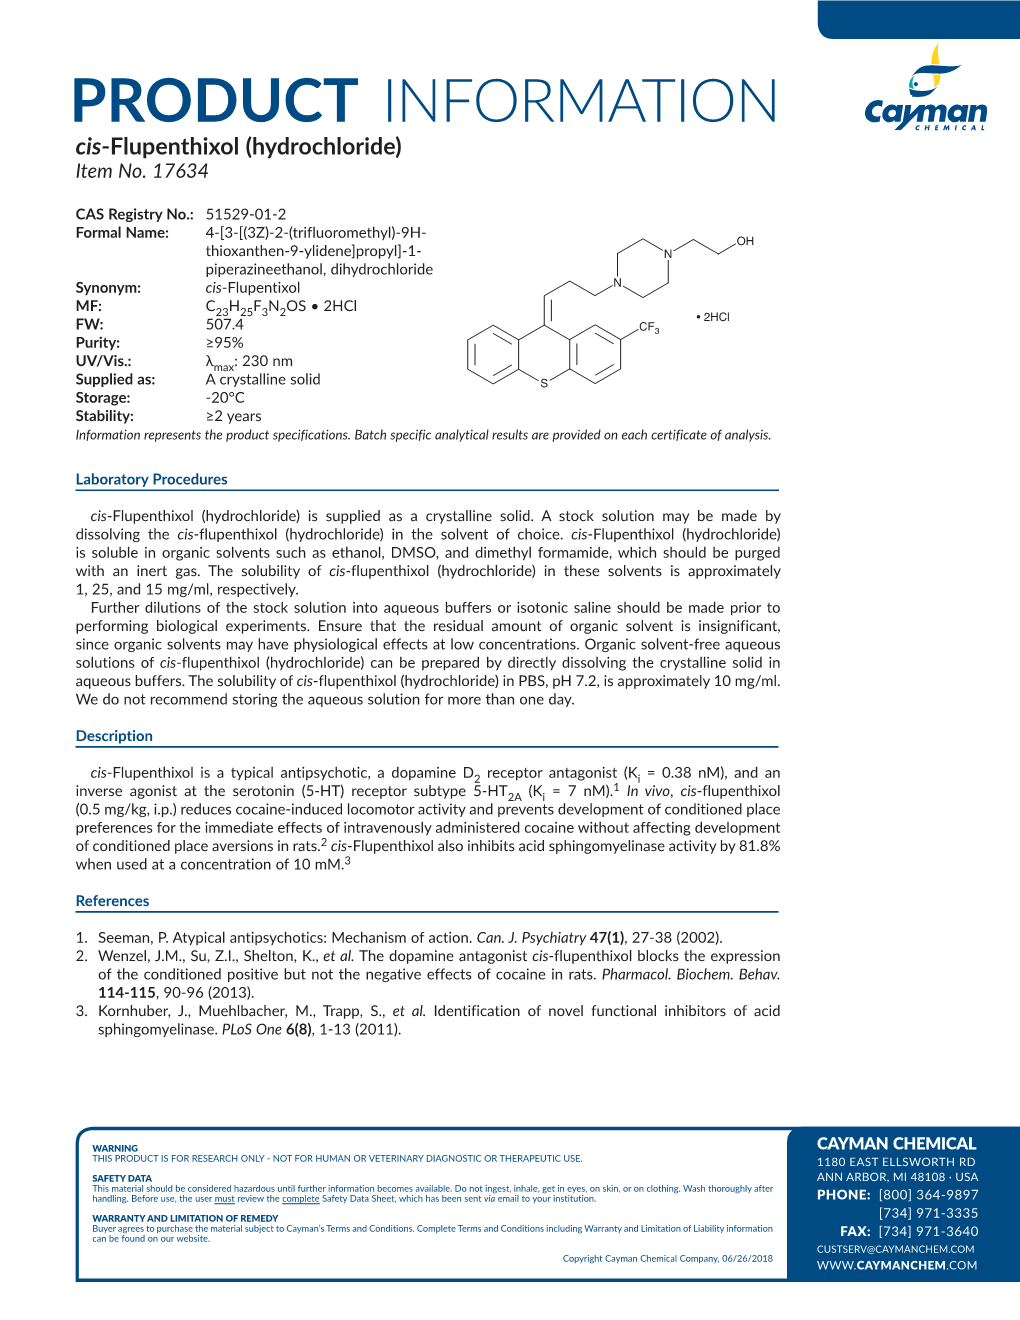 PRODUCT INFORMATION Cis-Flupenthixol (Hydrochloride) Item No